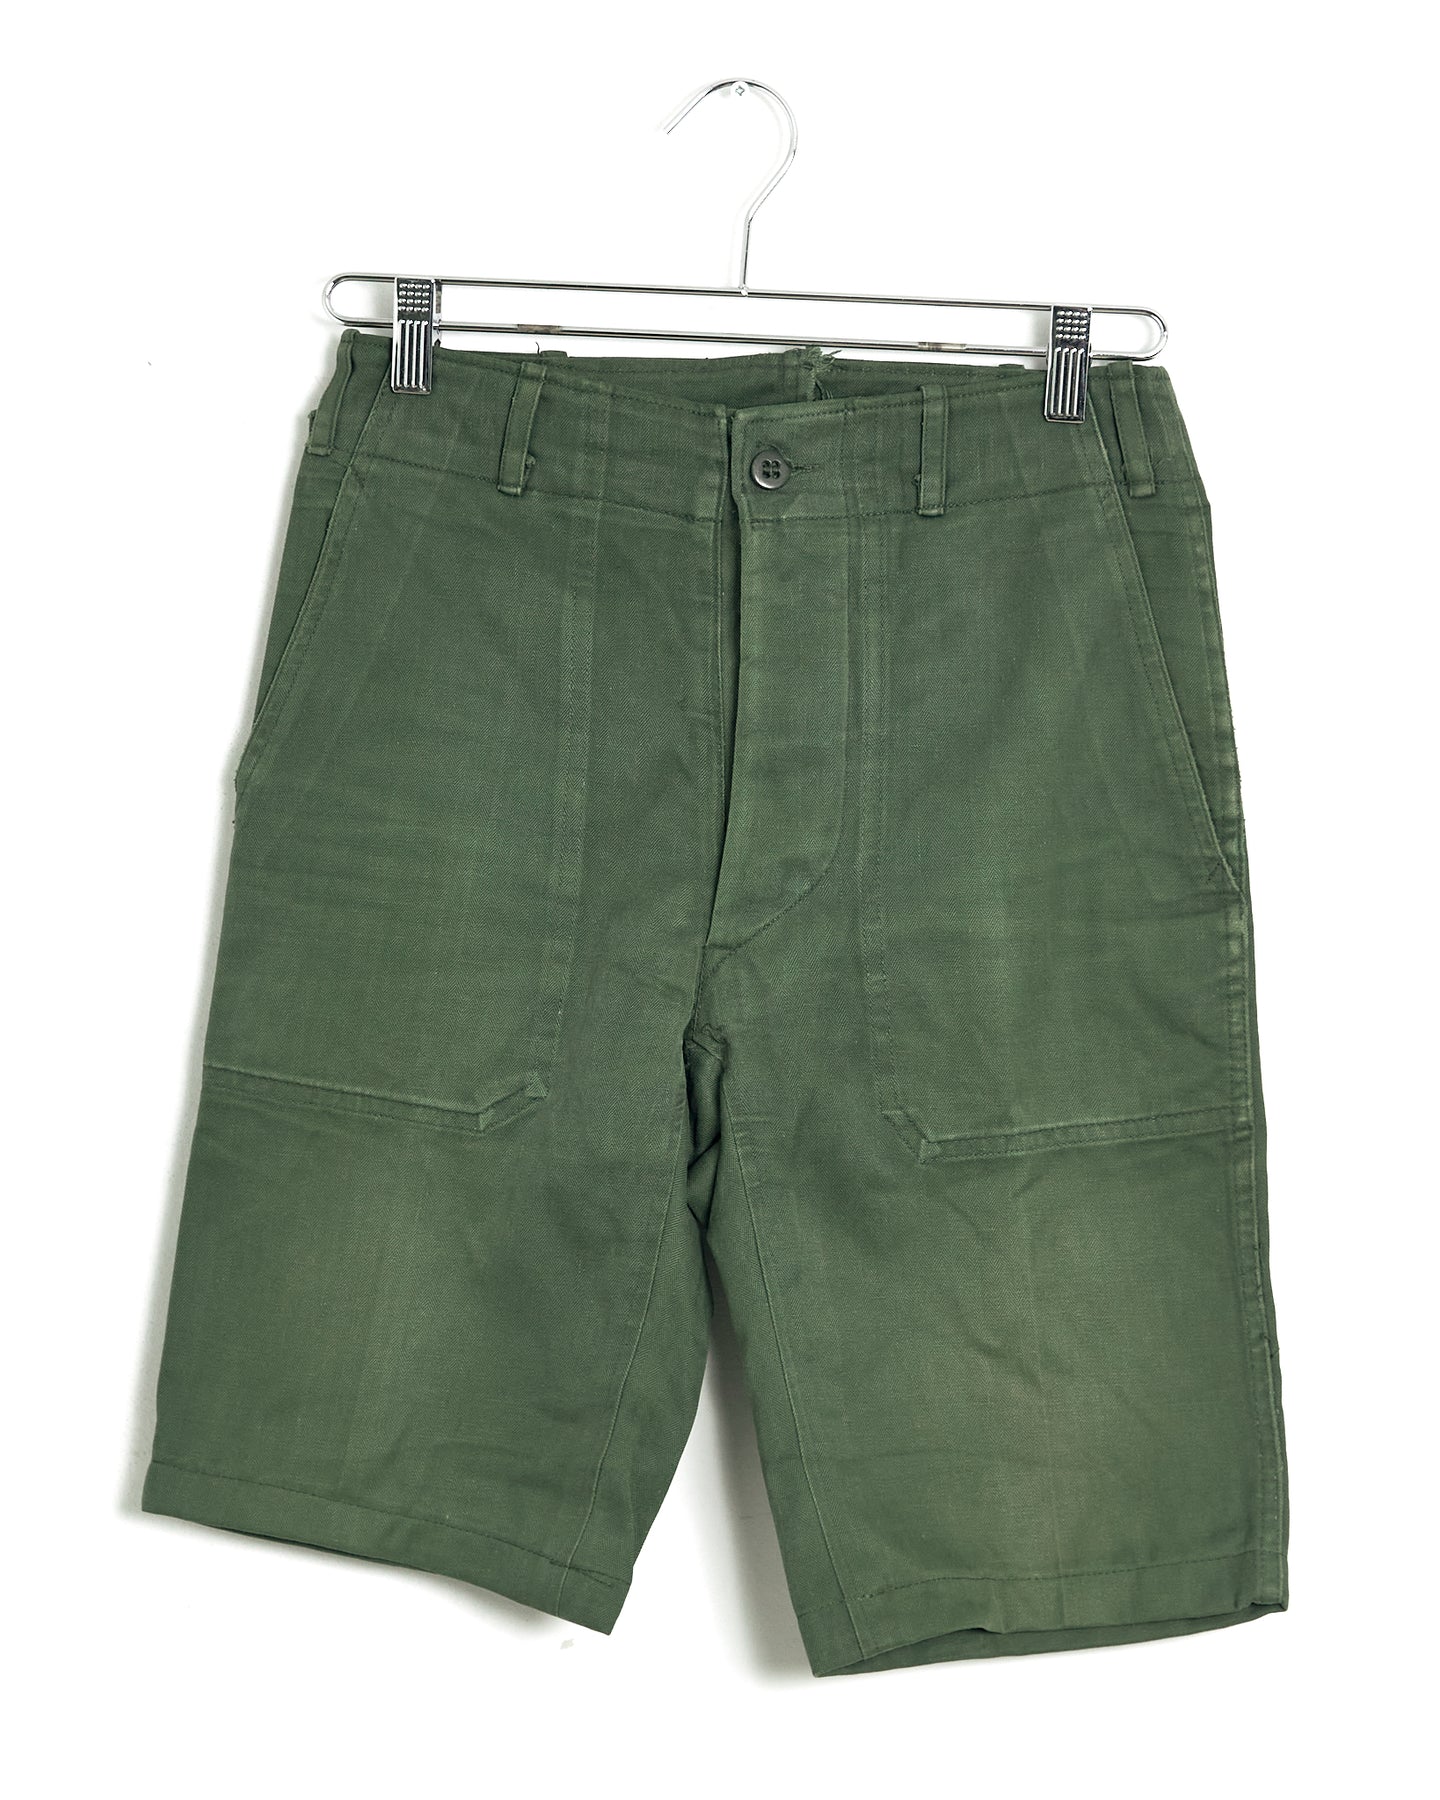 1950s/60s Korean War HBT Shorts - 28